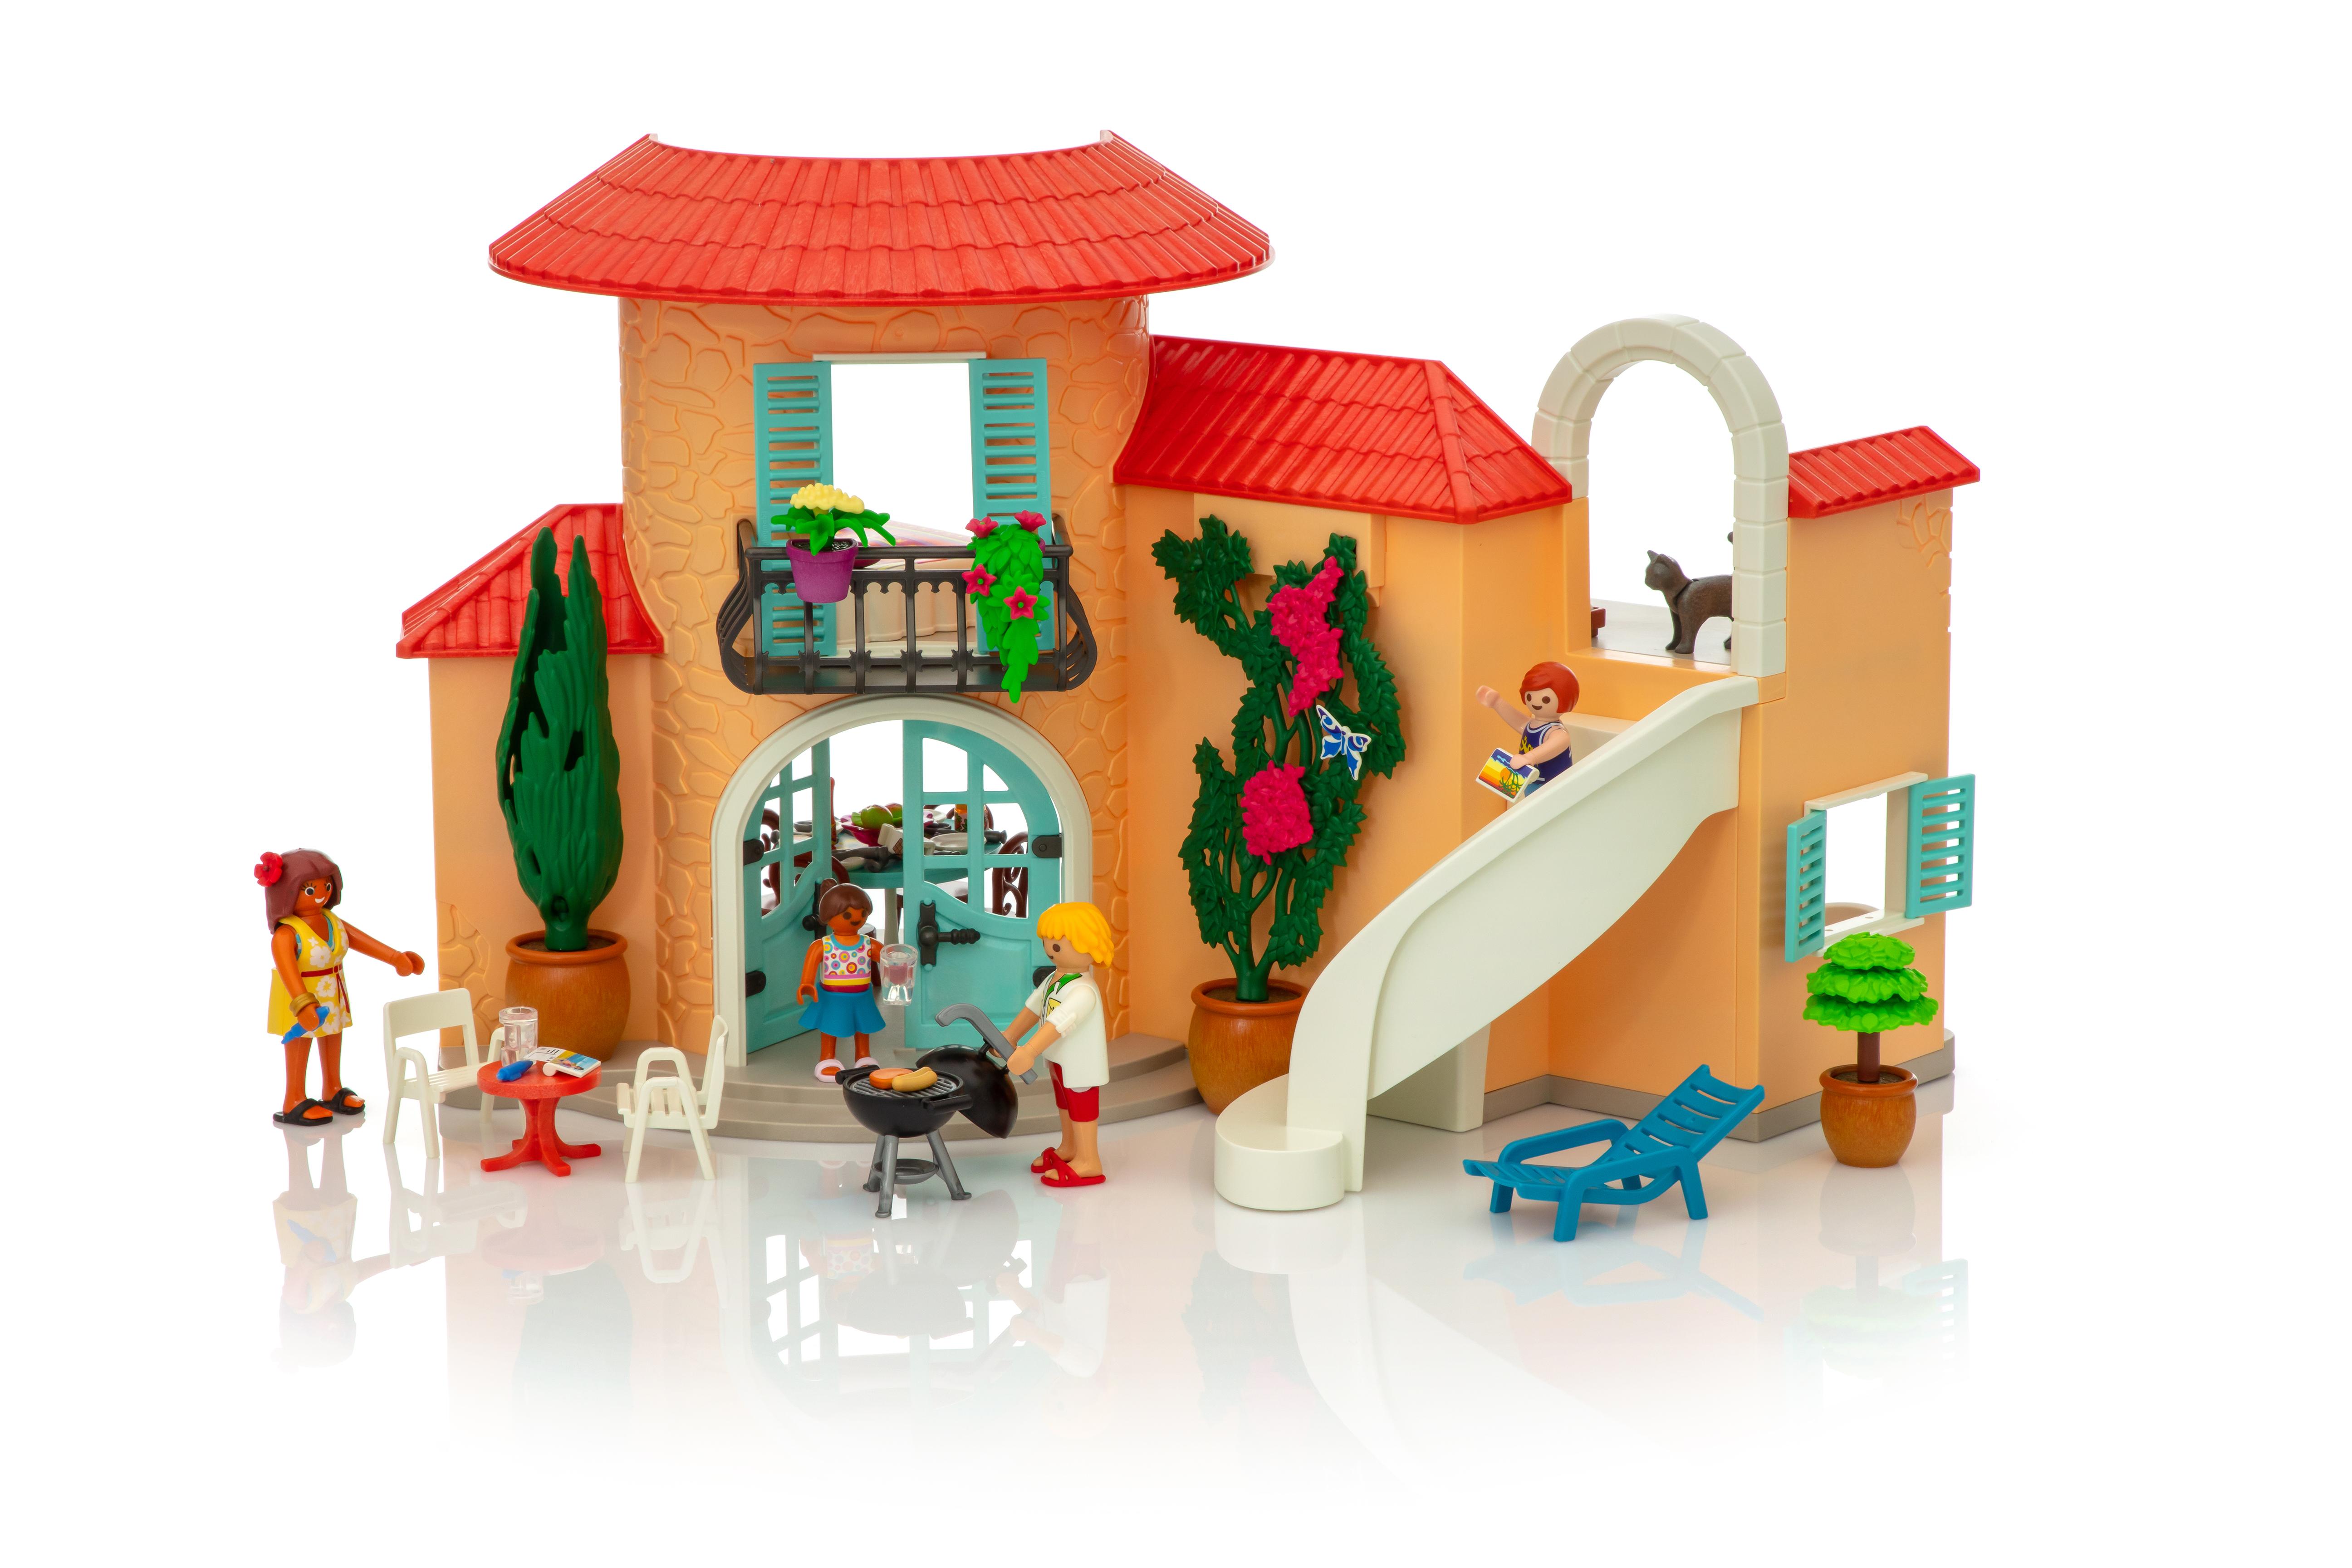 playmobil family fun villa